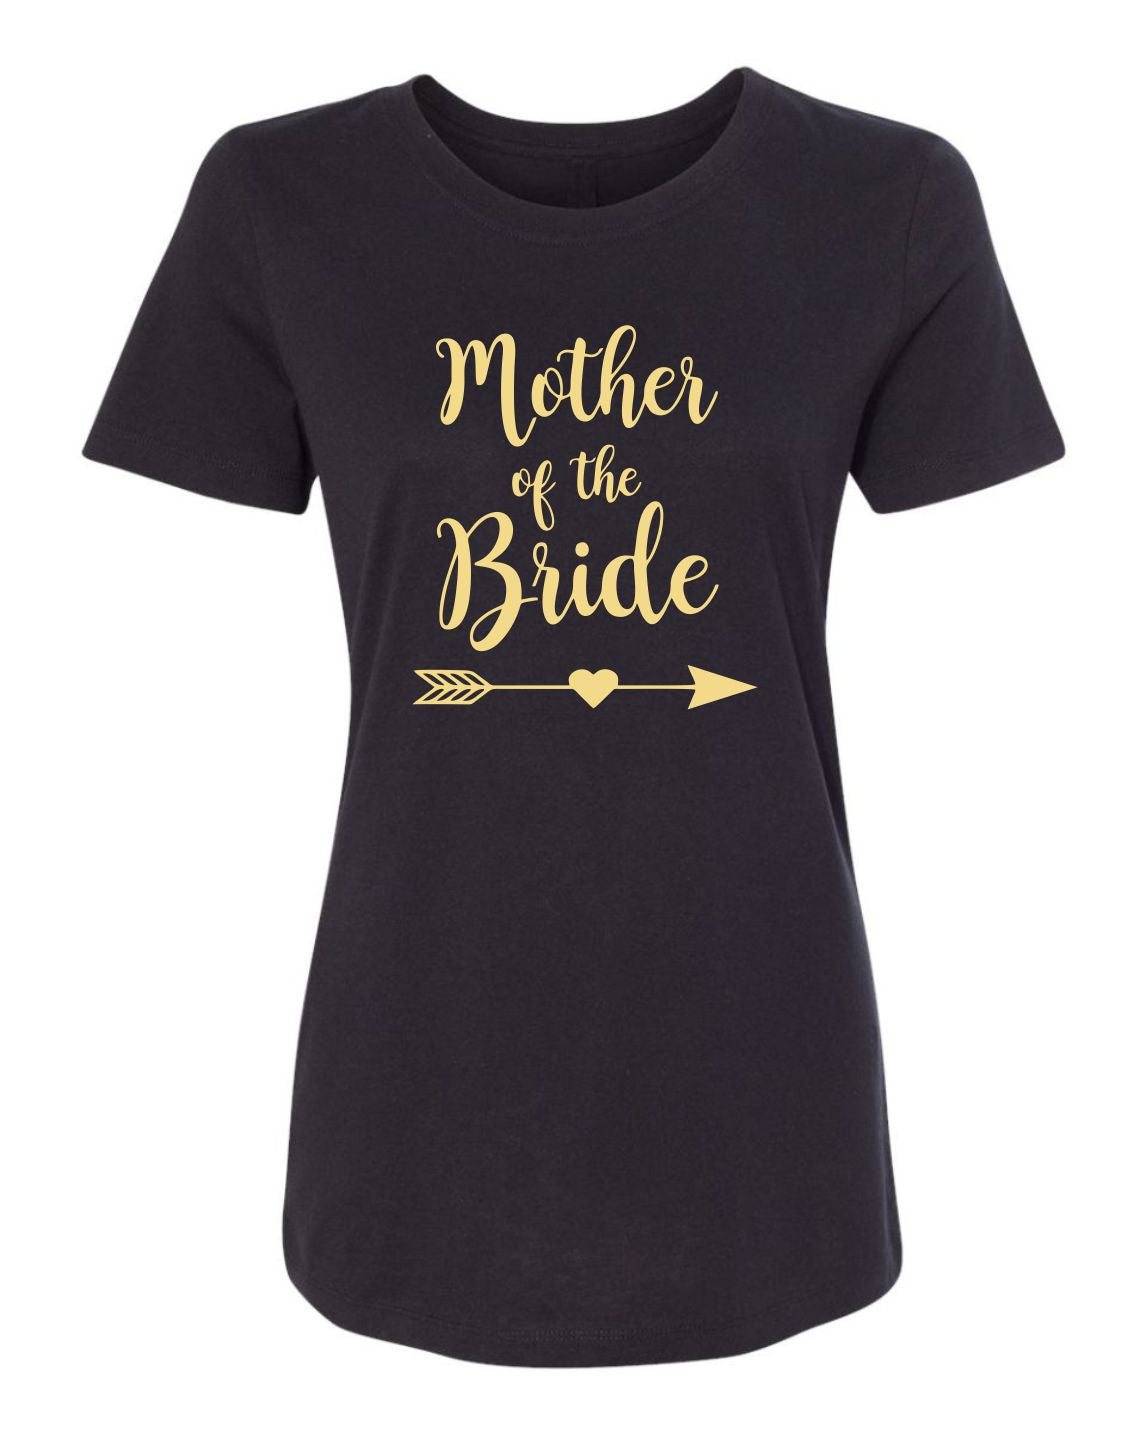 "Mother of the Bride" (Arrow Heart Design) T-Shirt